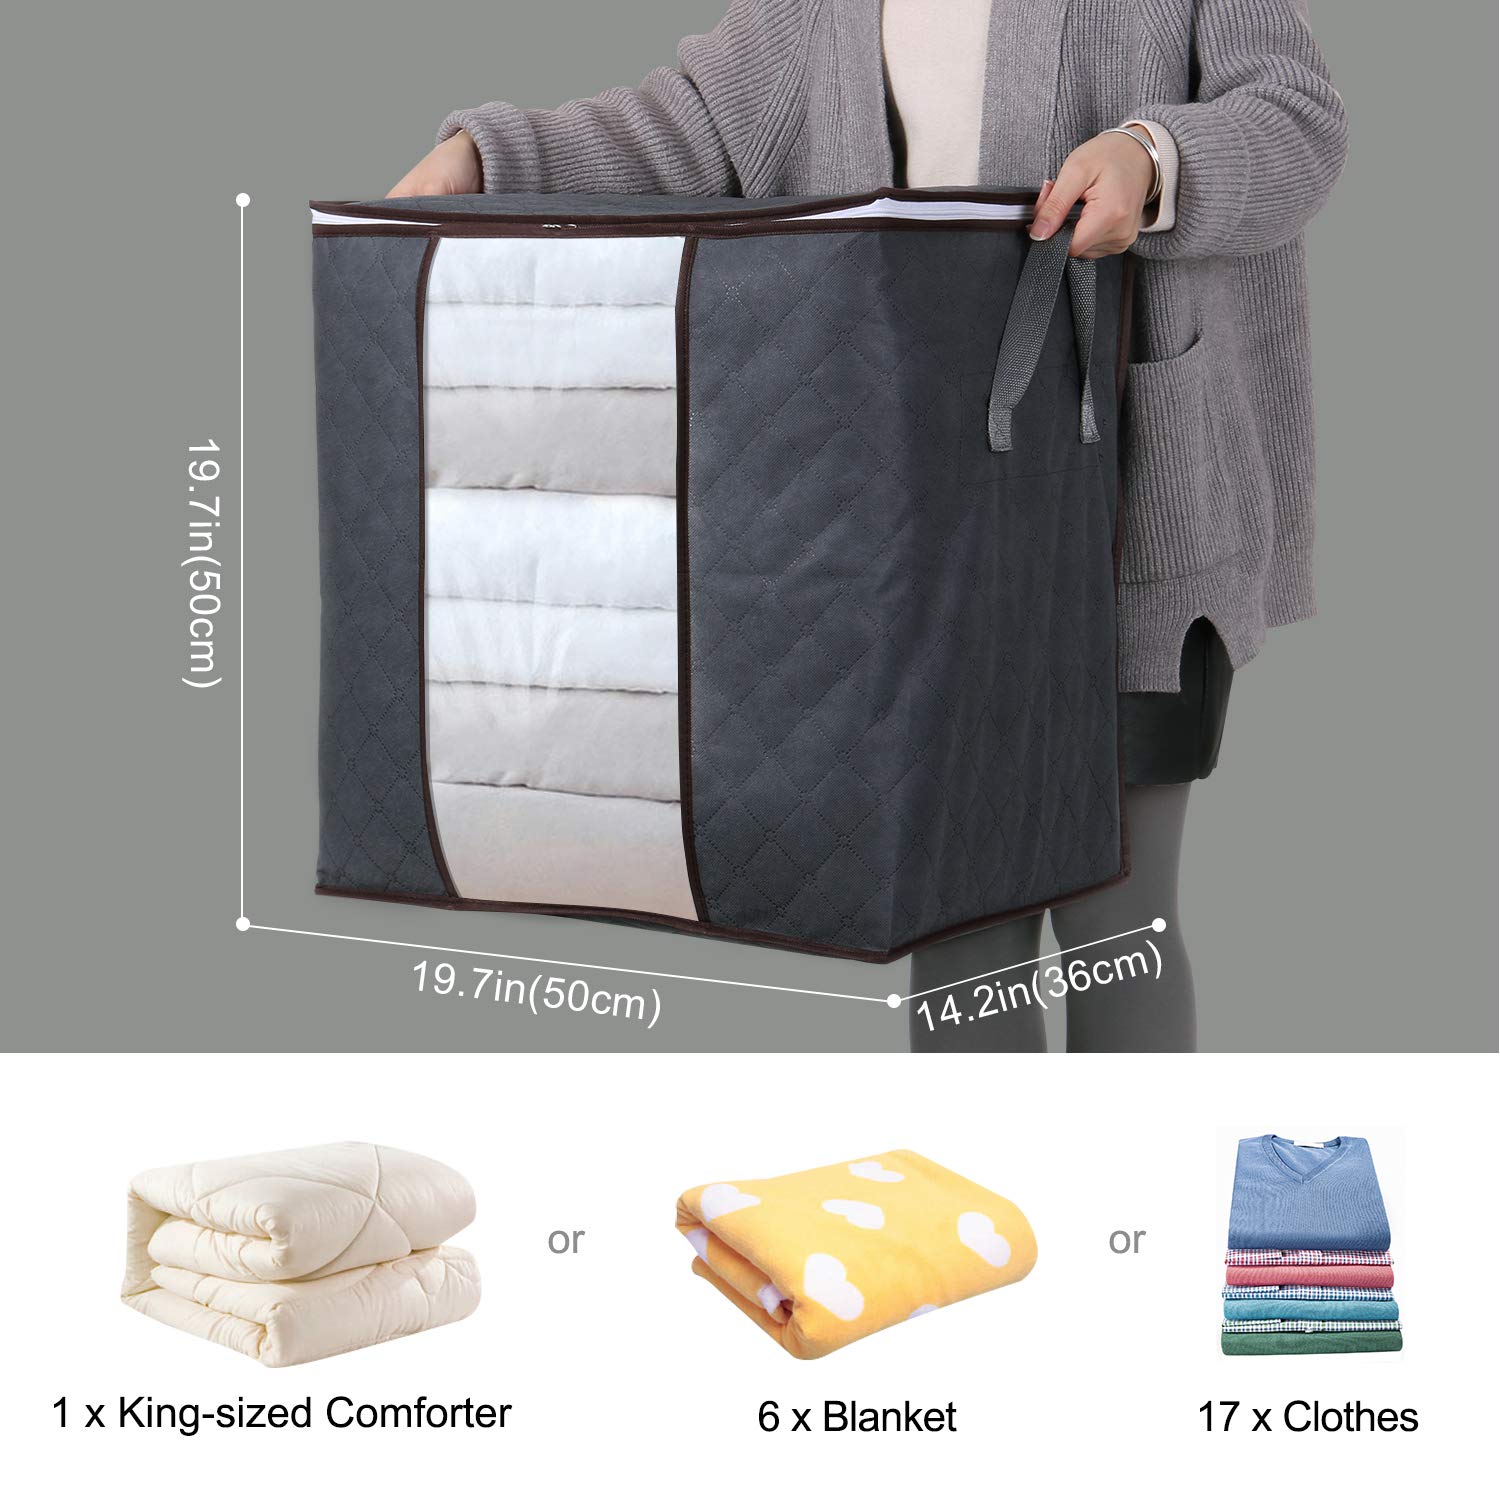  Lifewit Clothes Storage Bag 90L Large Capacity